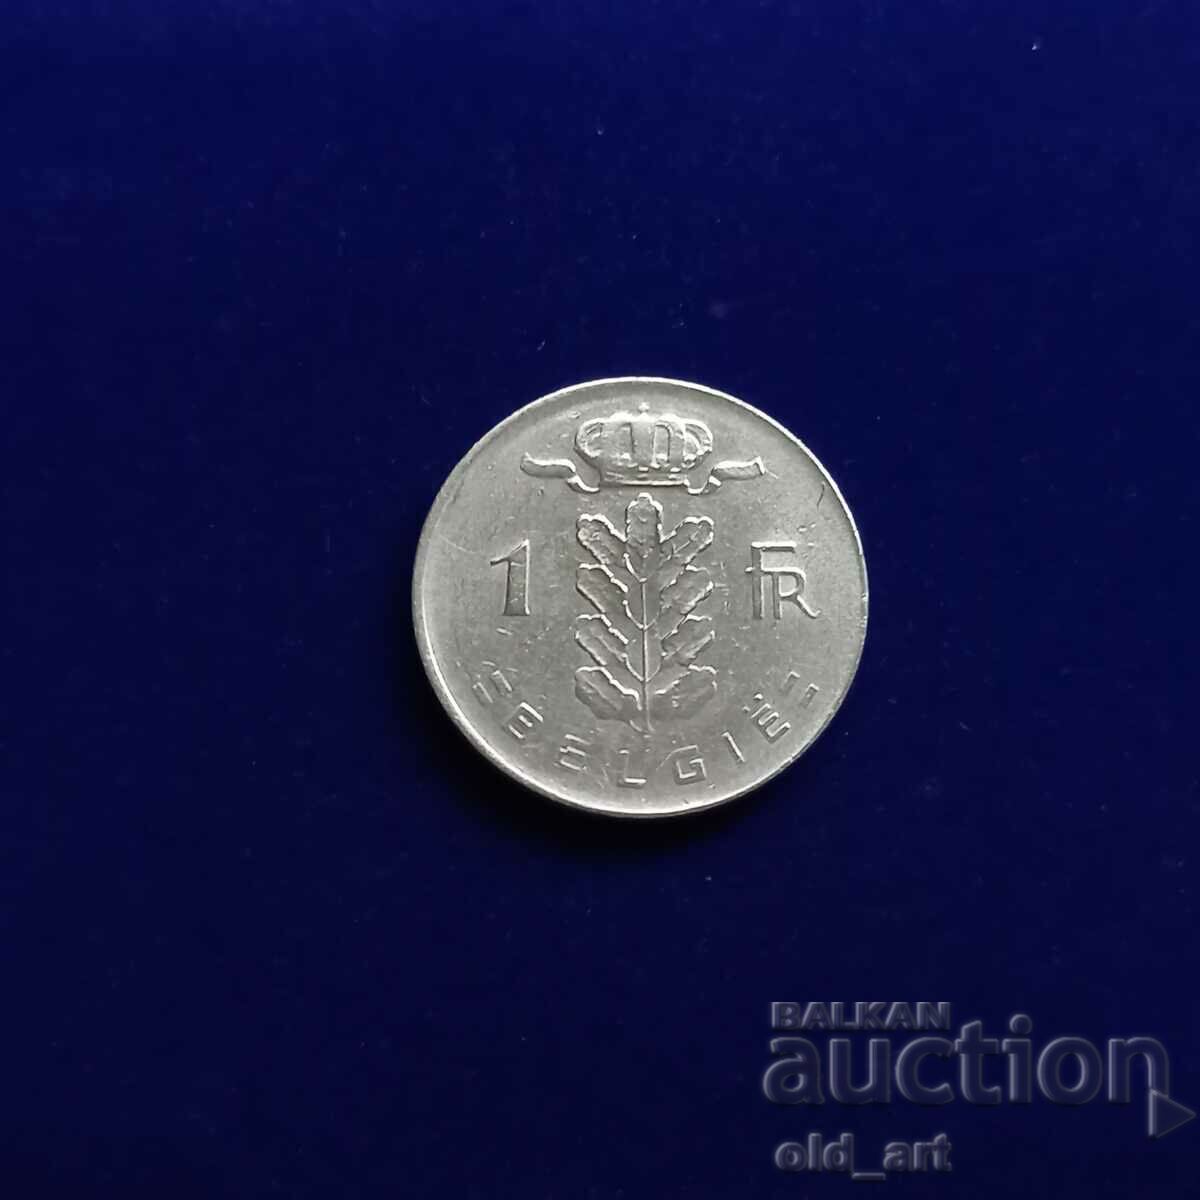 Monedă - Belgia, 1 franc 1975